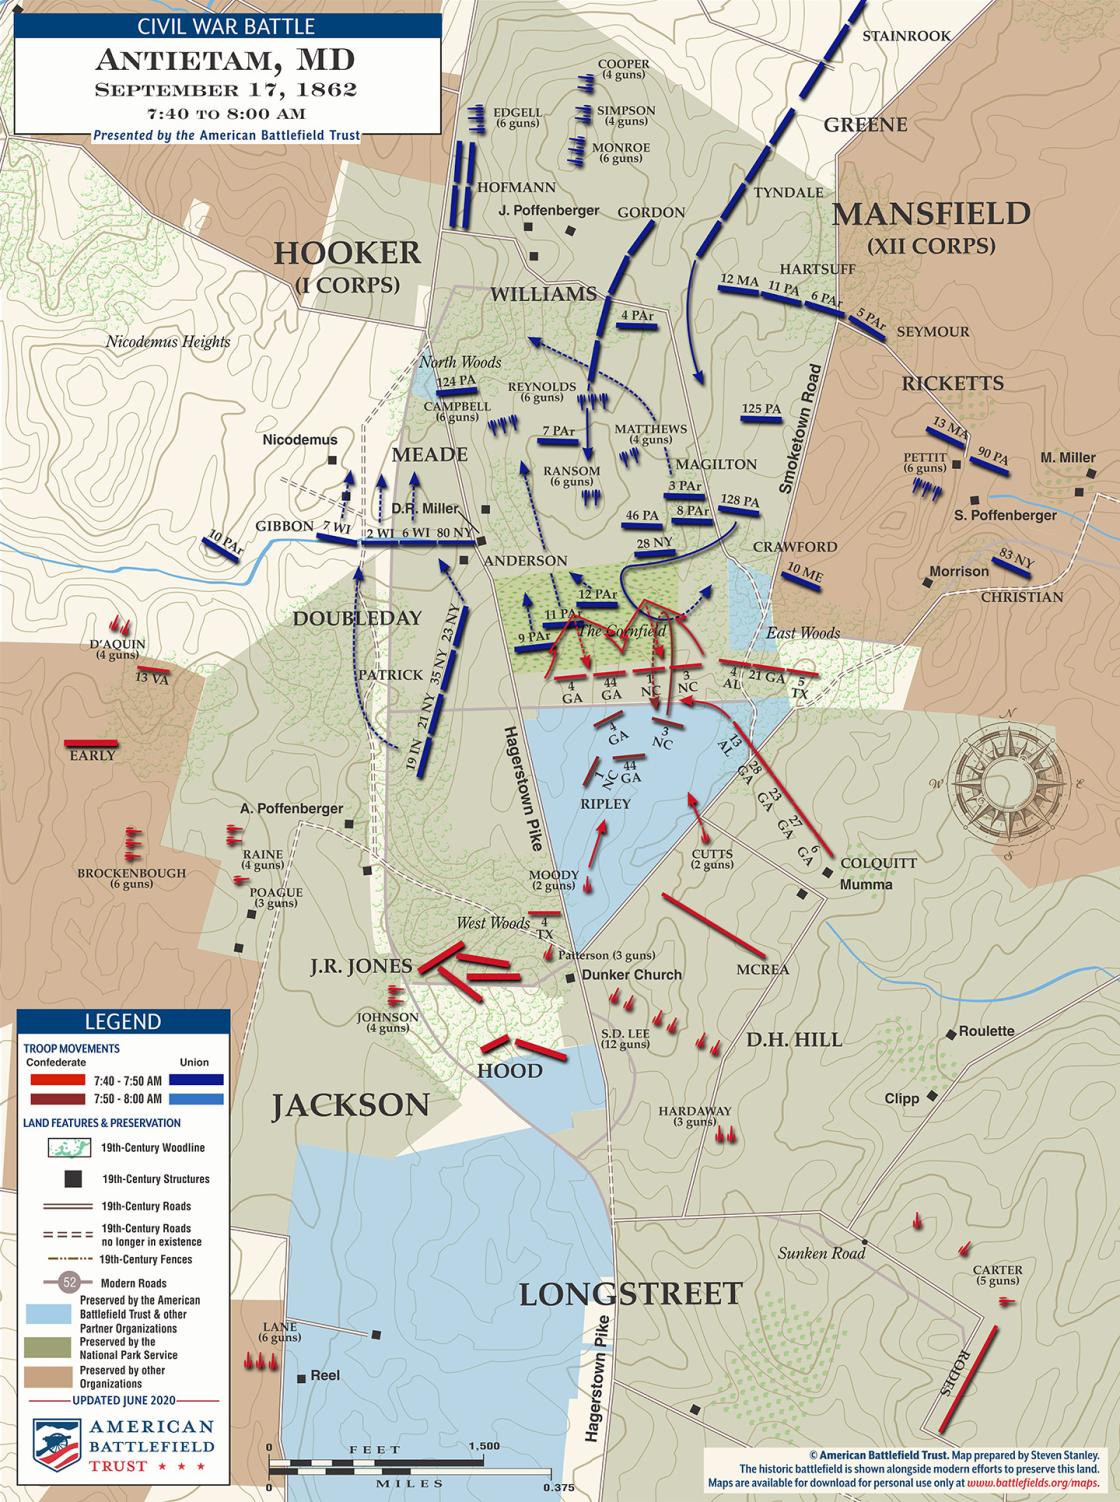 Antietam | East Woods and Cornfield | Sep 17, 1862 | 7:40 - 8:00 am (June 2020)